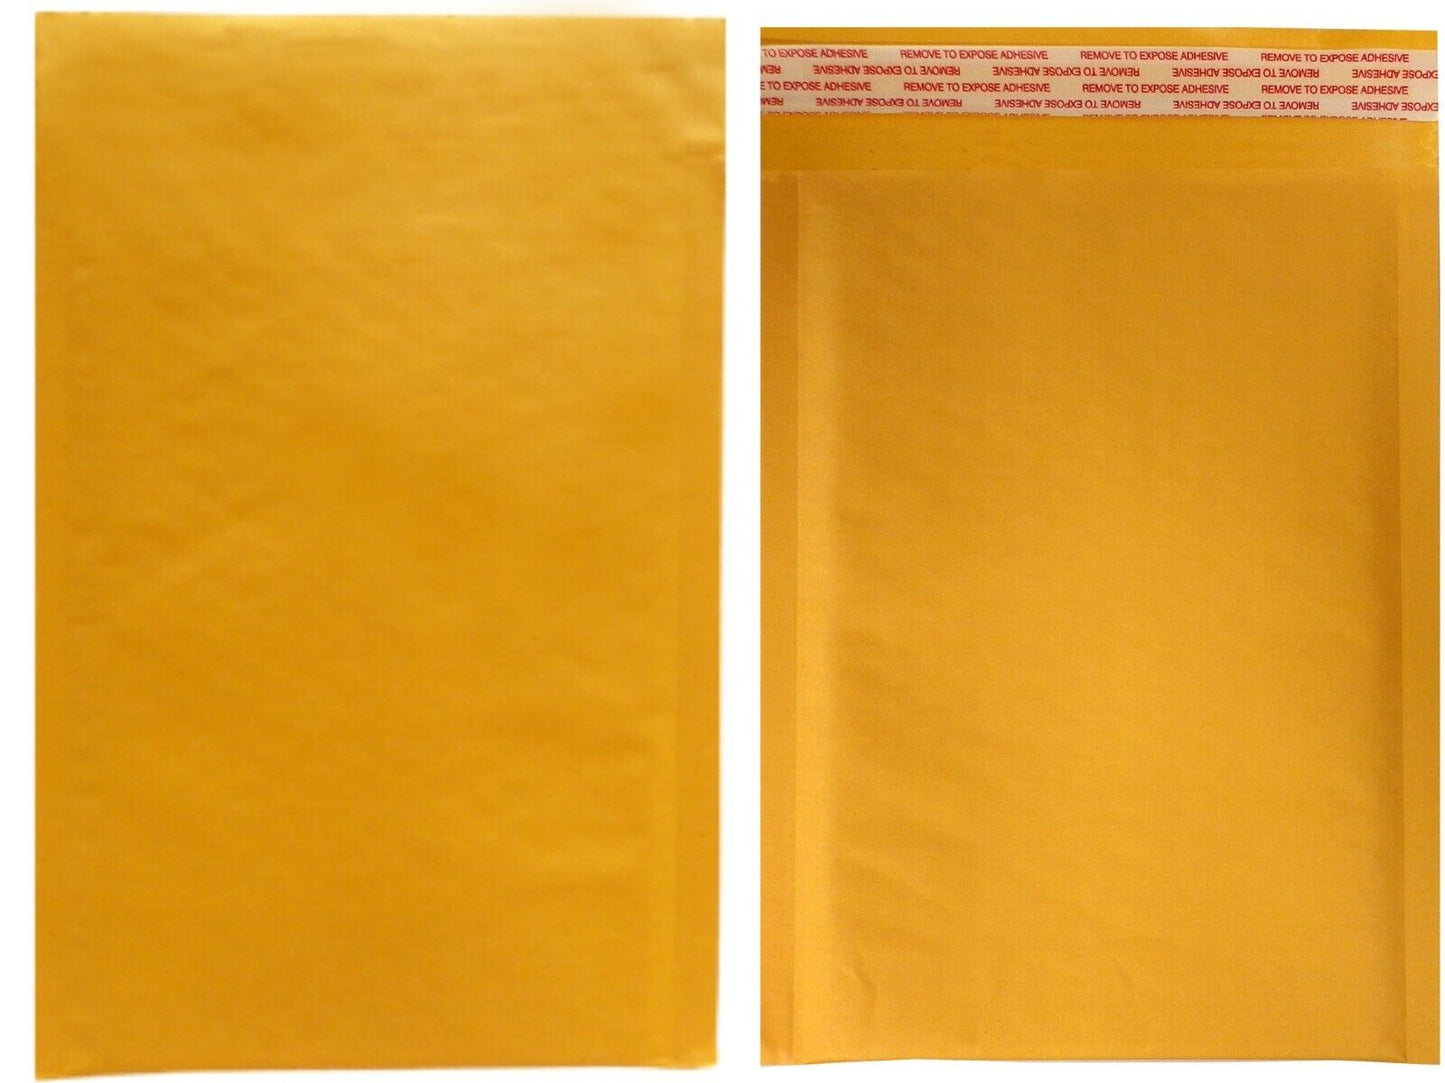 Polycyber1000pcs#0 Kraft Bubble Envelopes Mailers 6 X 9(Economy Quality-Thinner)